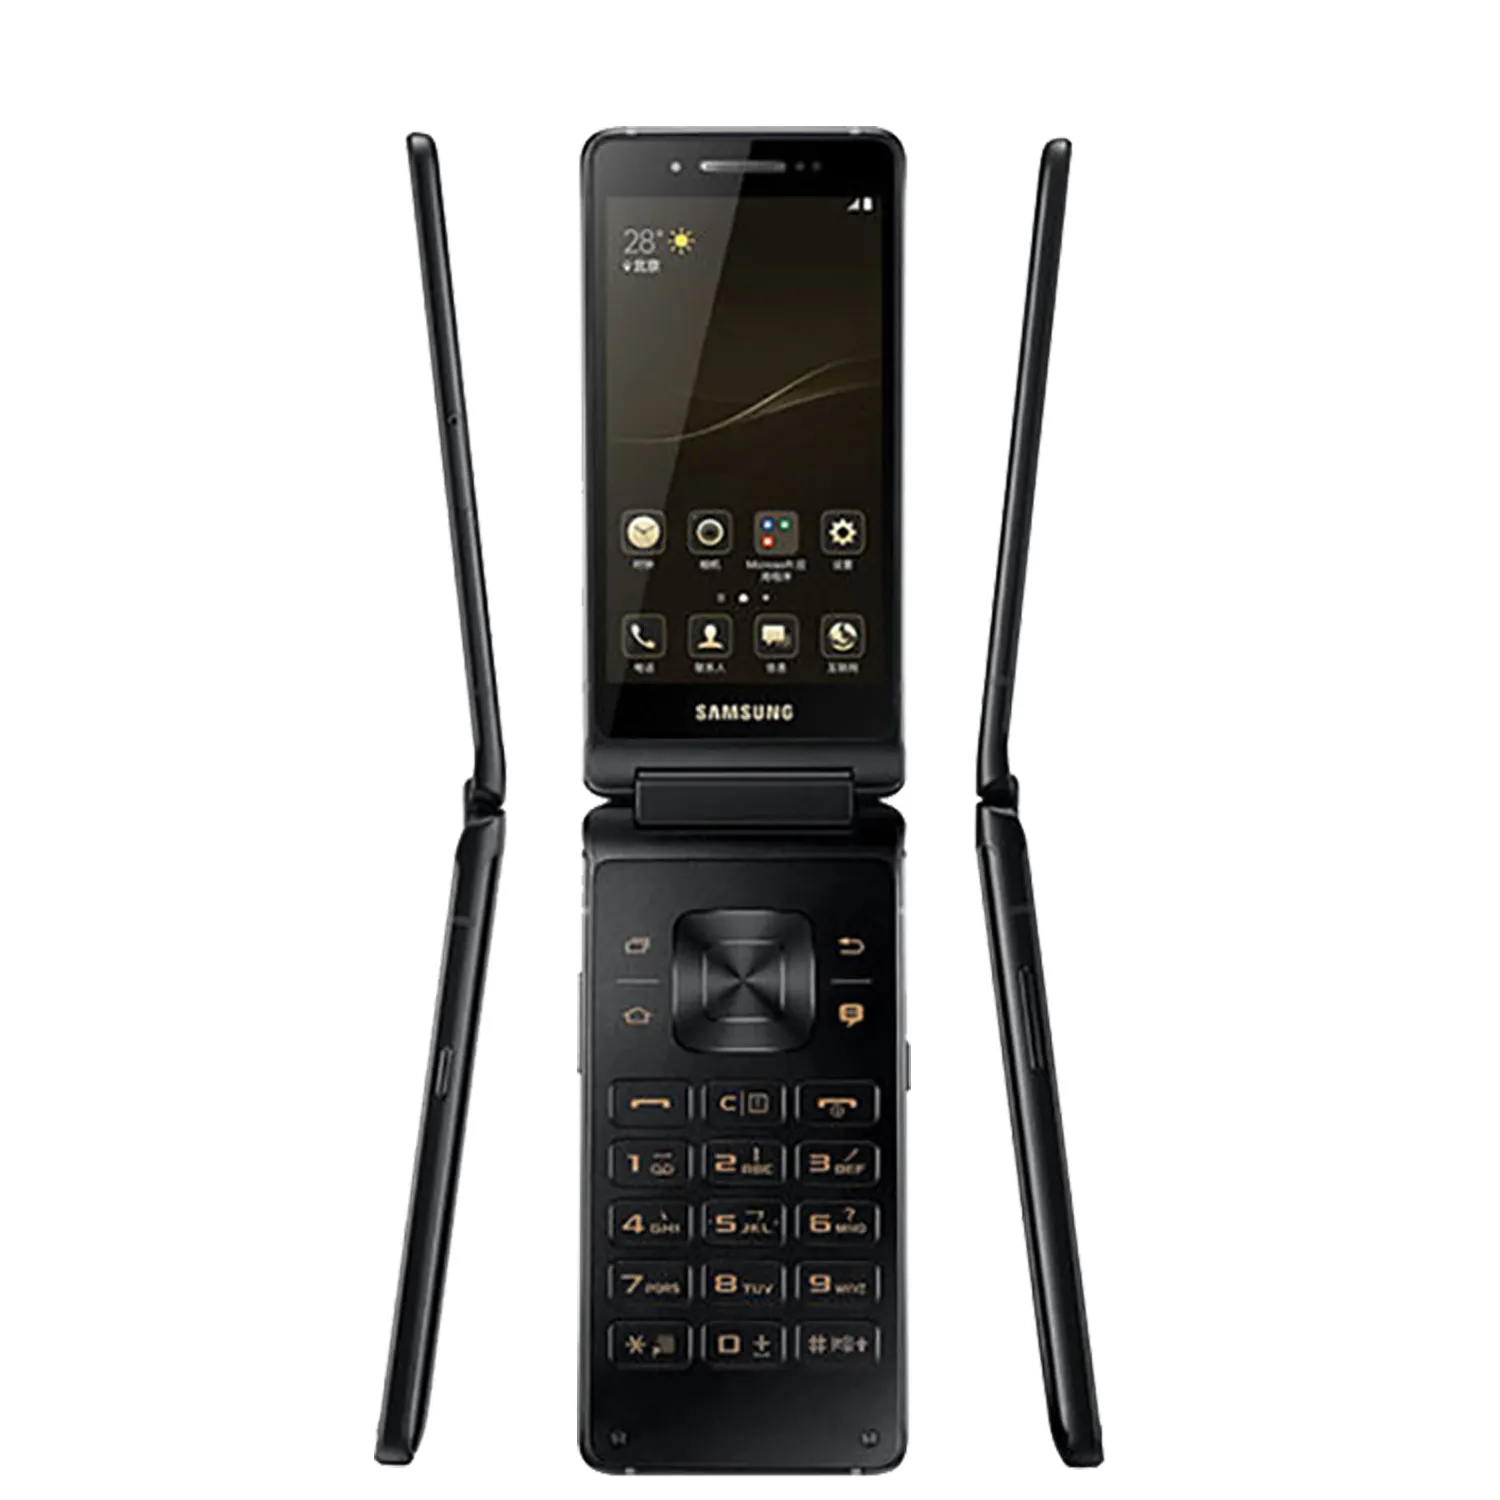 सैमसंग लीडर 8 जी9298 4जी एलटीई मोबाइल फोन 4.2 इंच AMOLED स्मार्ट फोन स्नैपड्रैगन 821 क्वाड कोर फ्लिप एंड्रॉइड सेल फोन के लिए